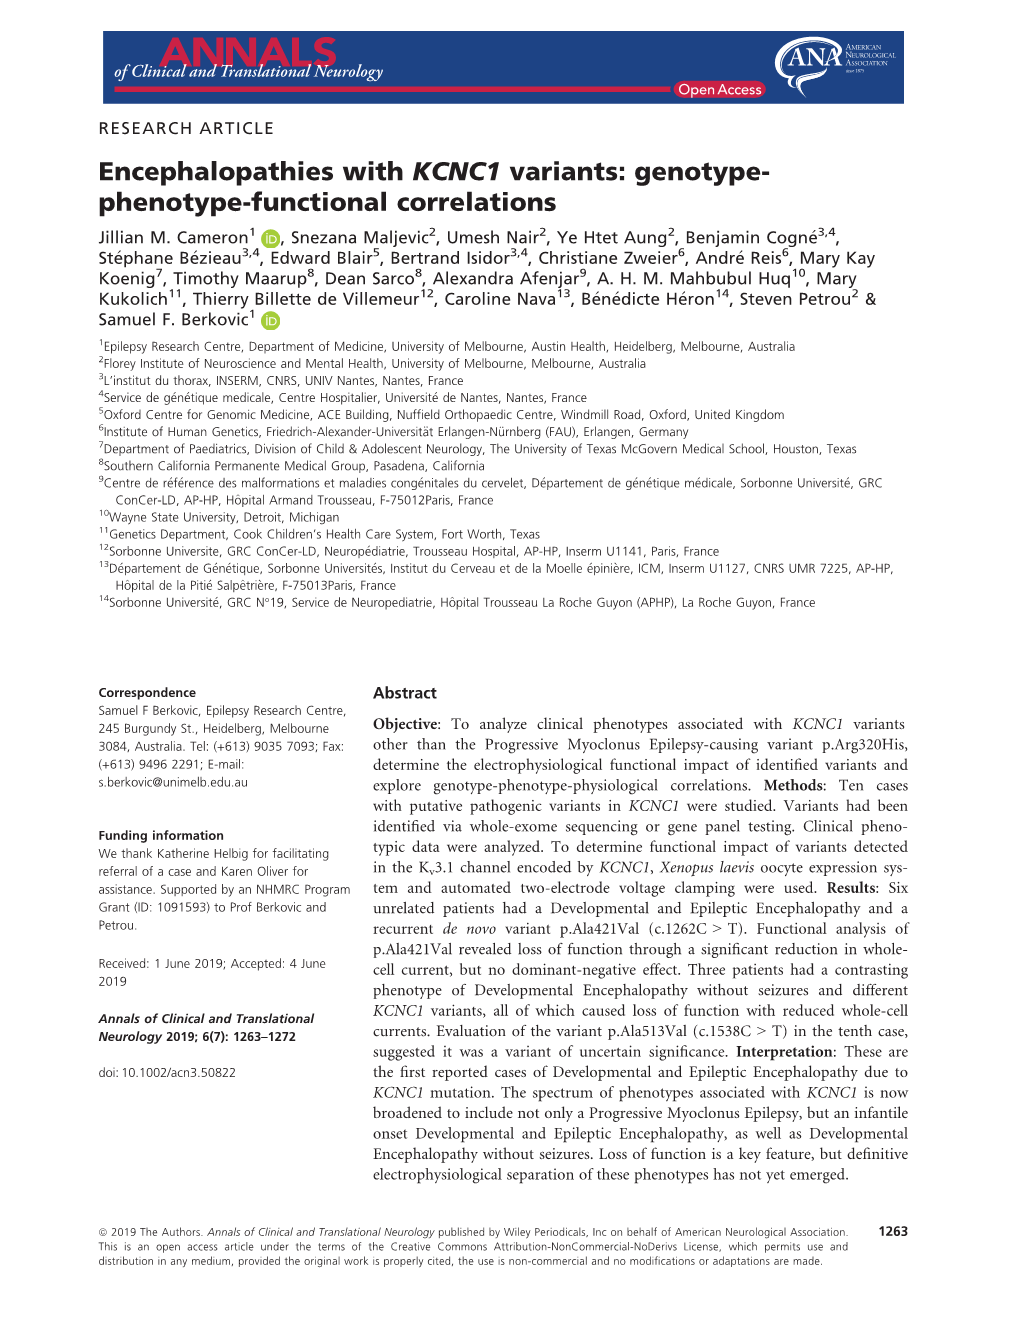 Encephalopathies with KCNC1 Variants: Genotype- Phenotype-Functional Correlations Jillian M